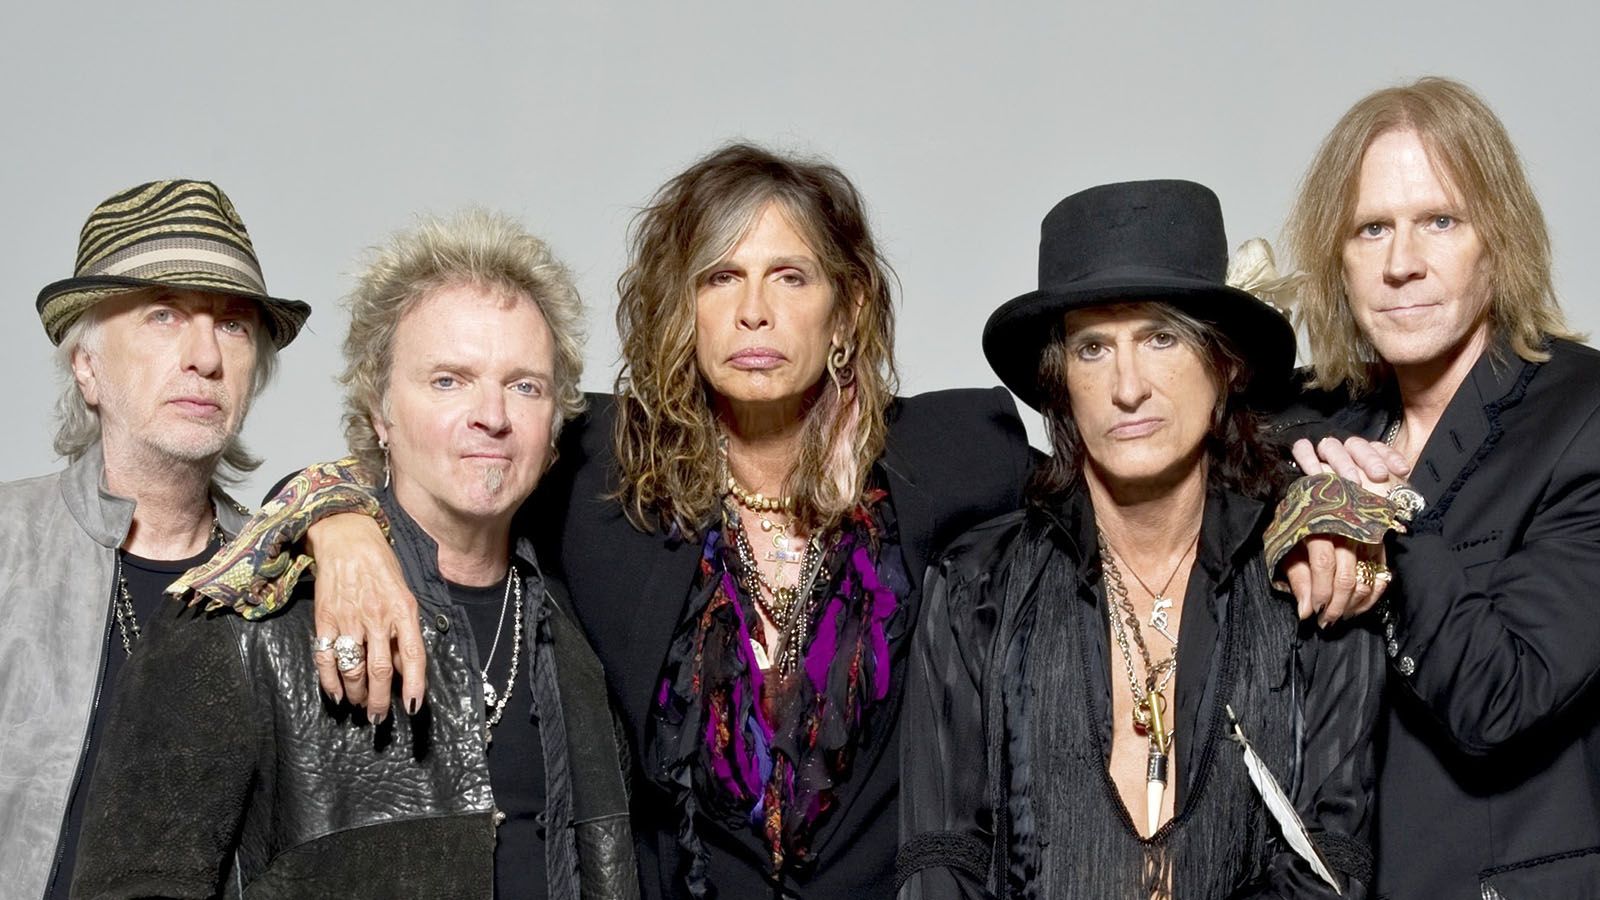 Aerosmith have announced their next tour will be their last.